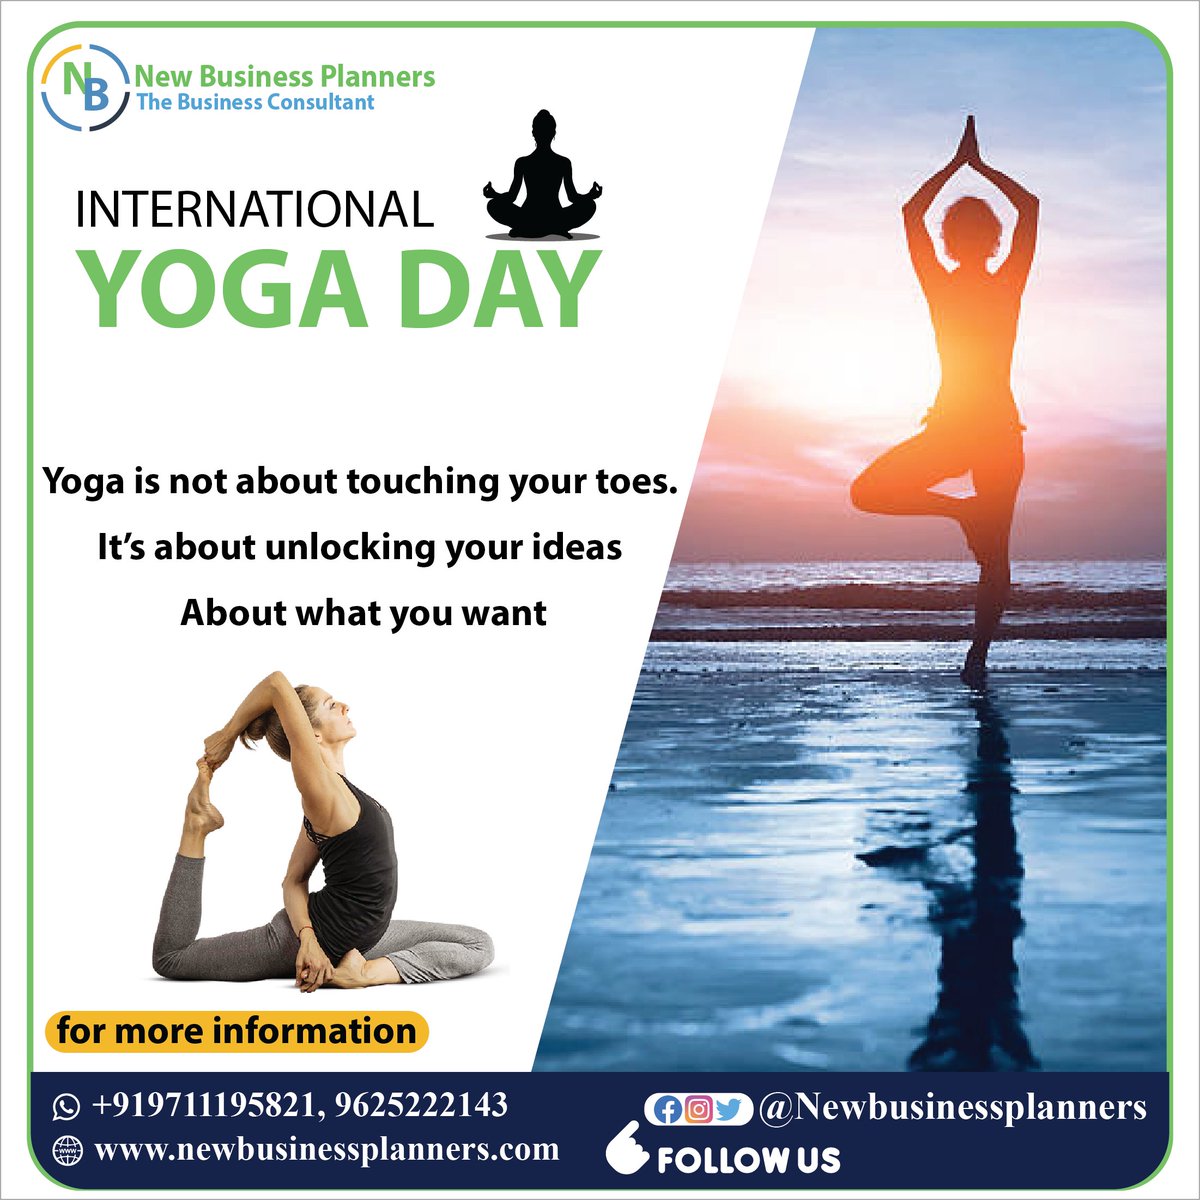 Happy International Yoga Day!
.
.
.
.
#newbusinessplanner #yogaday #yogaeverywhere #YogaLove #mindfulnessmatter #wellnessjourney #selfcaresunday #businessgrowth #workplacesafety #performancemanagement #traininganddevelopment #hrcompliance #WorkplaceSuccess #BusinessGrowth